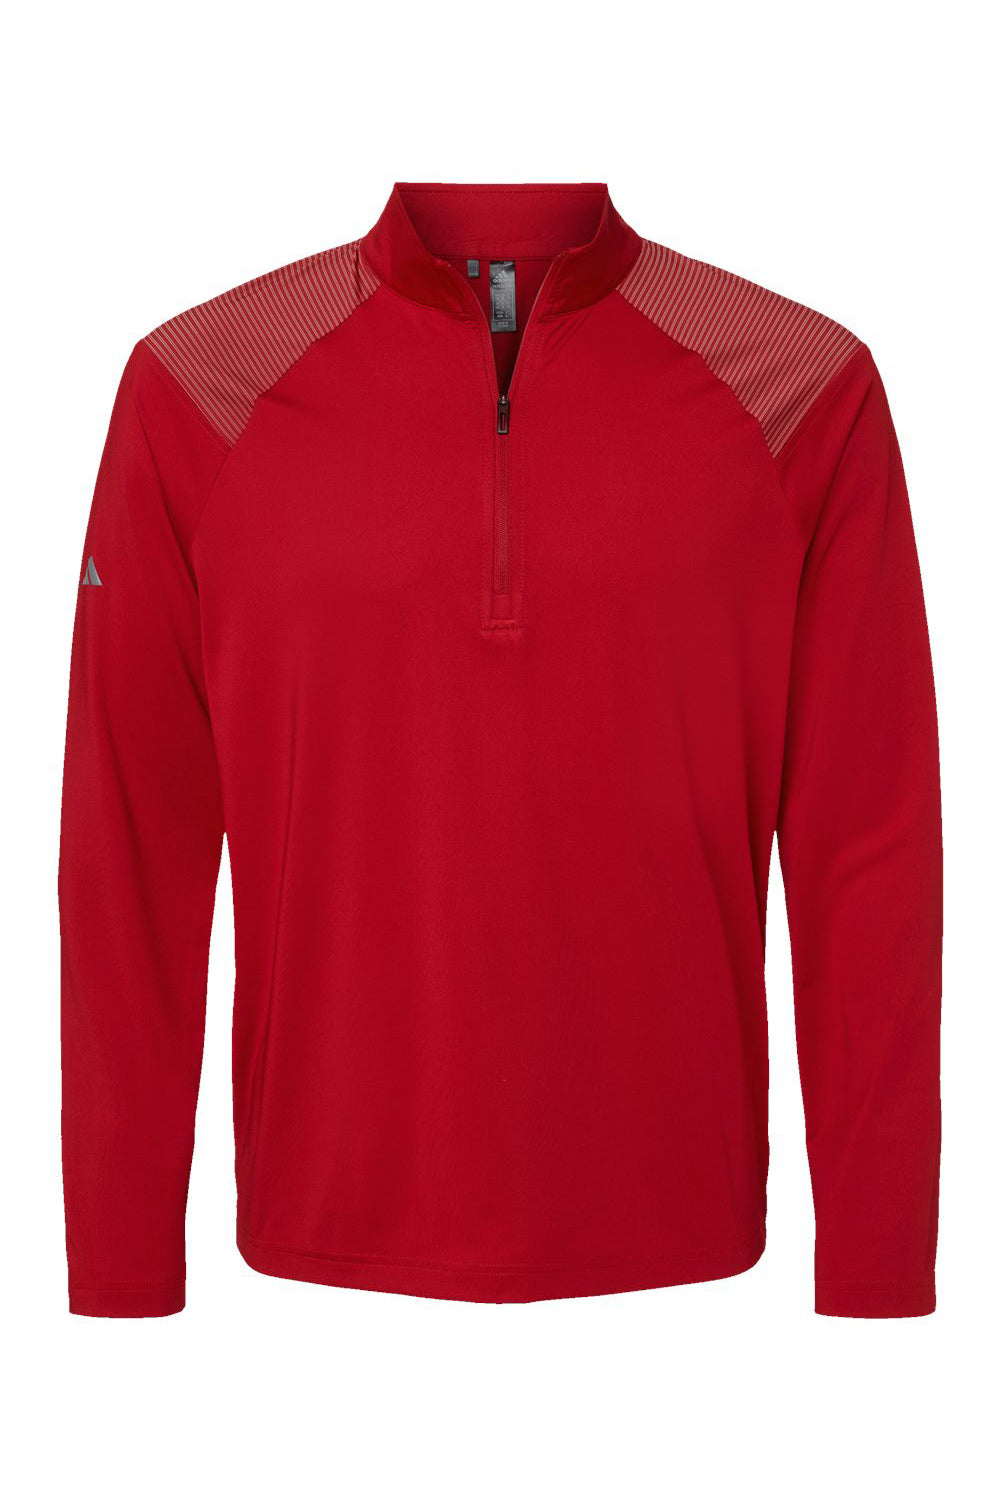 Adidas A520 Mens Shoulder Stripe Moisture Wicking 1/4 Zip Sweatshirt Team Power Red Flat Front